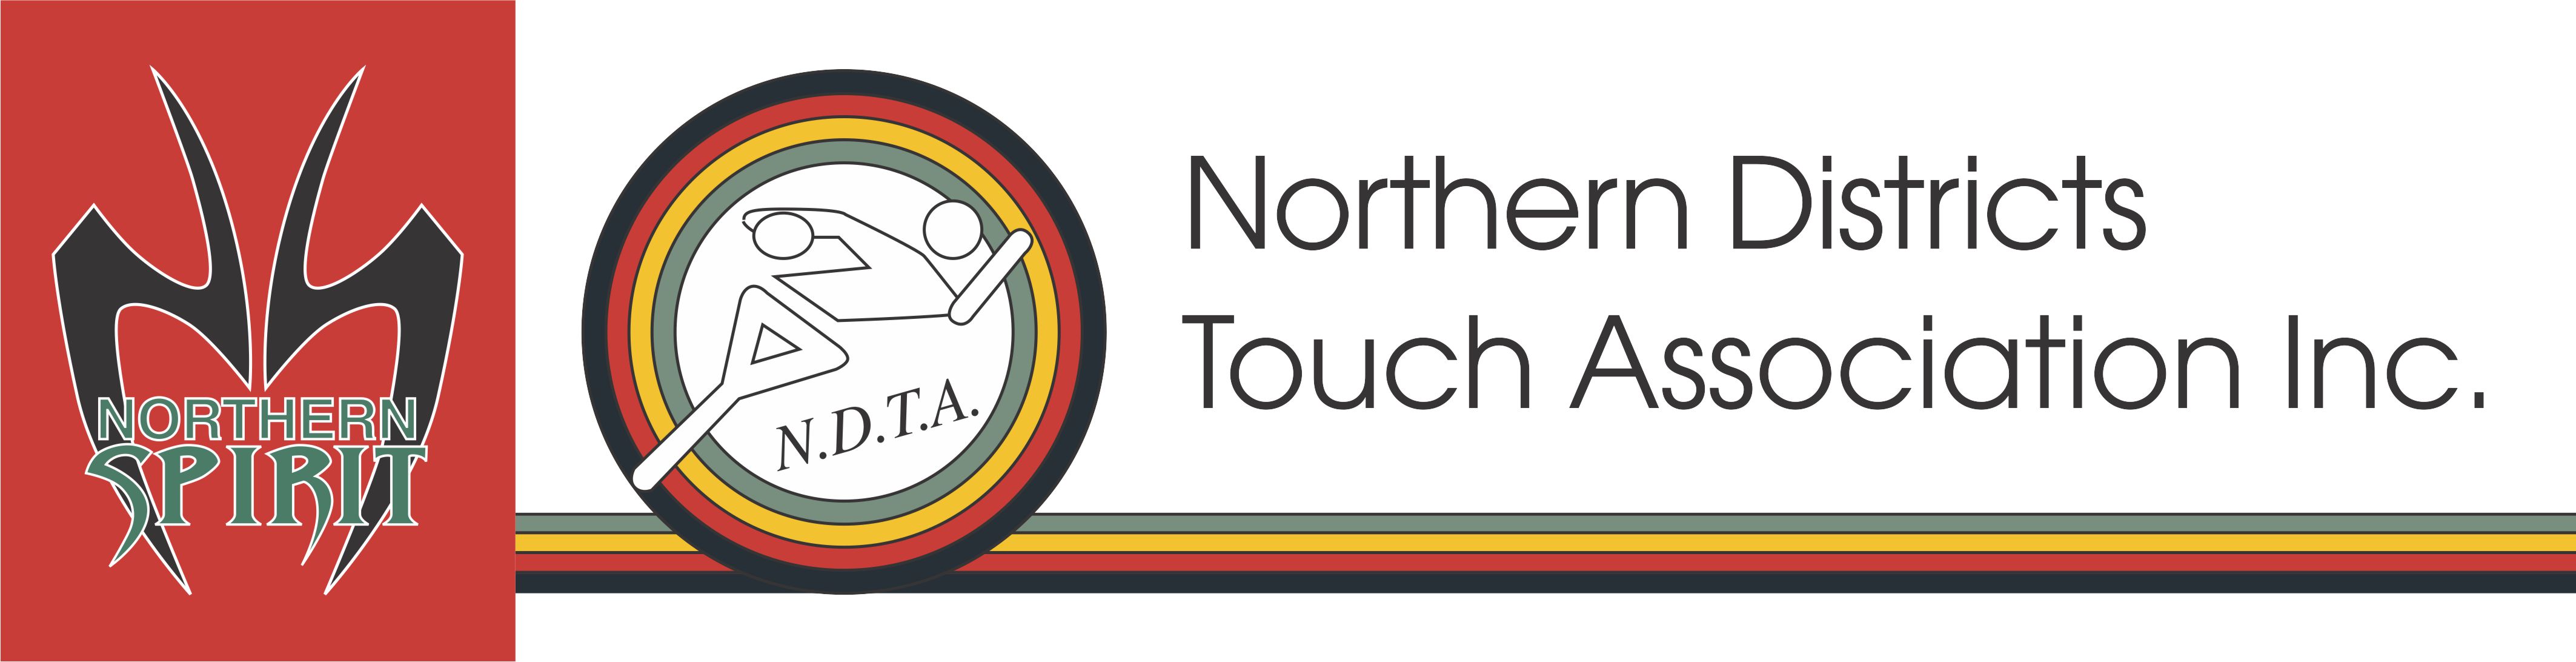 Northern Spirit - Northern Districts Touch Association